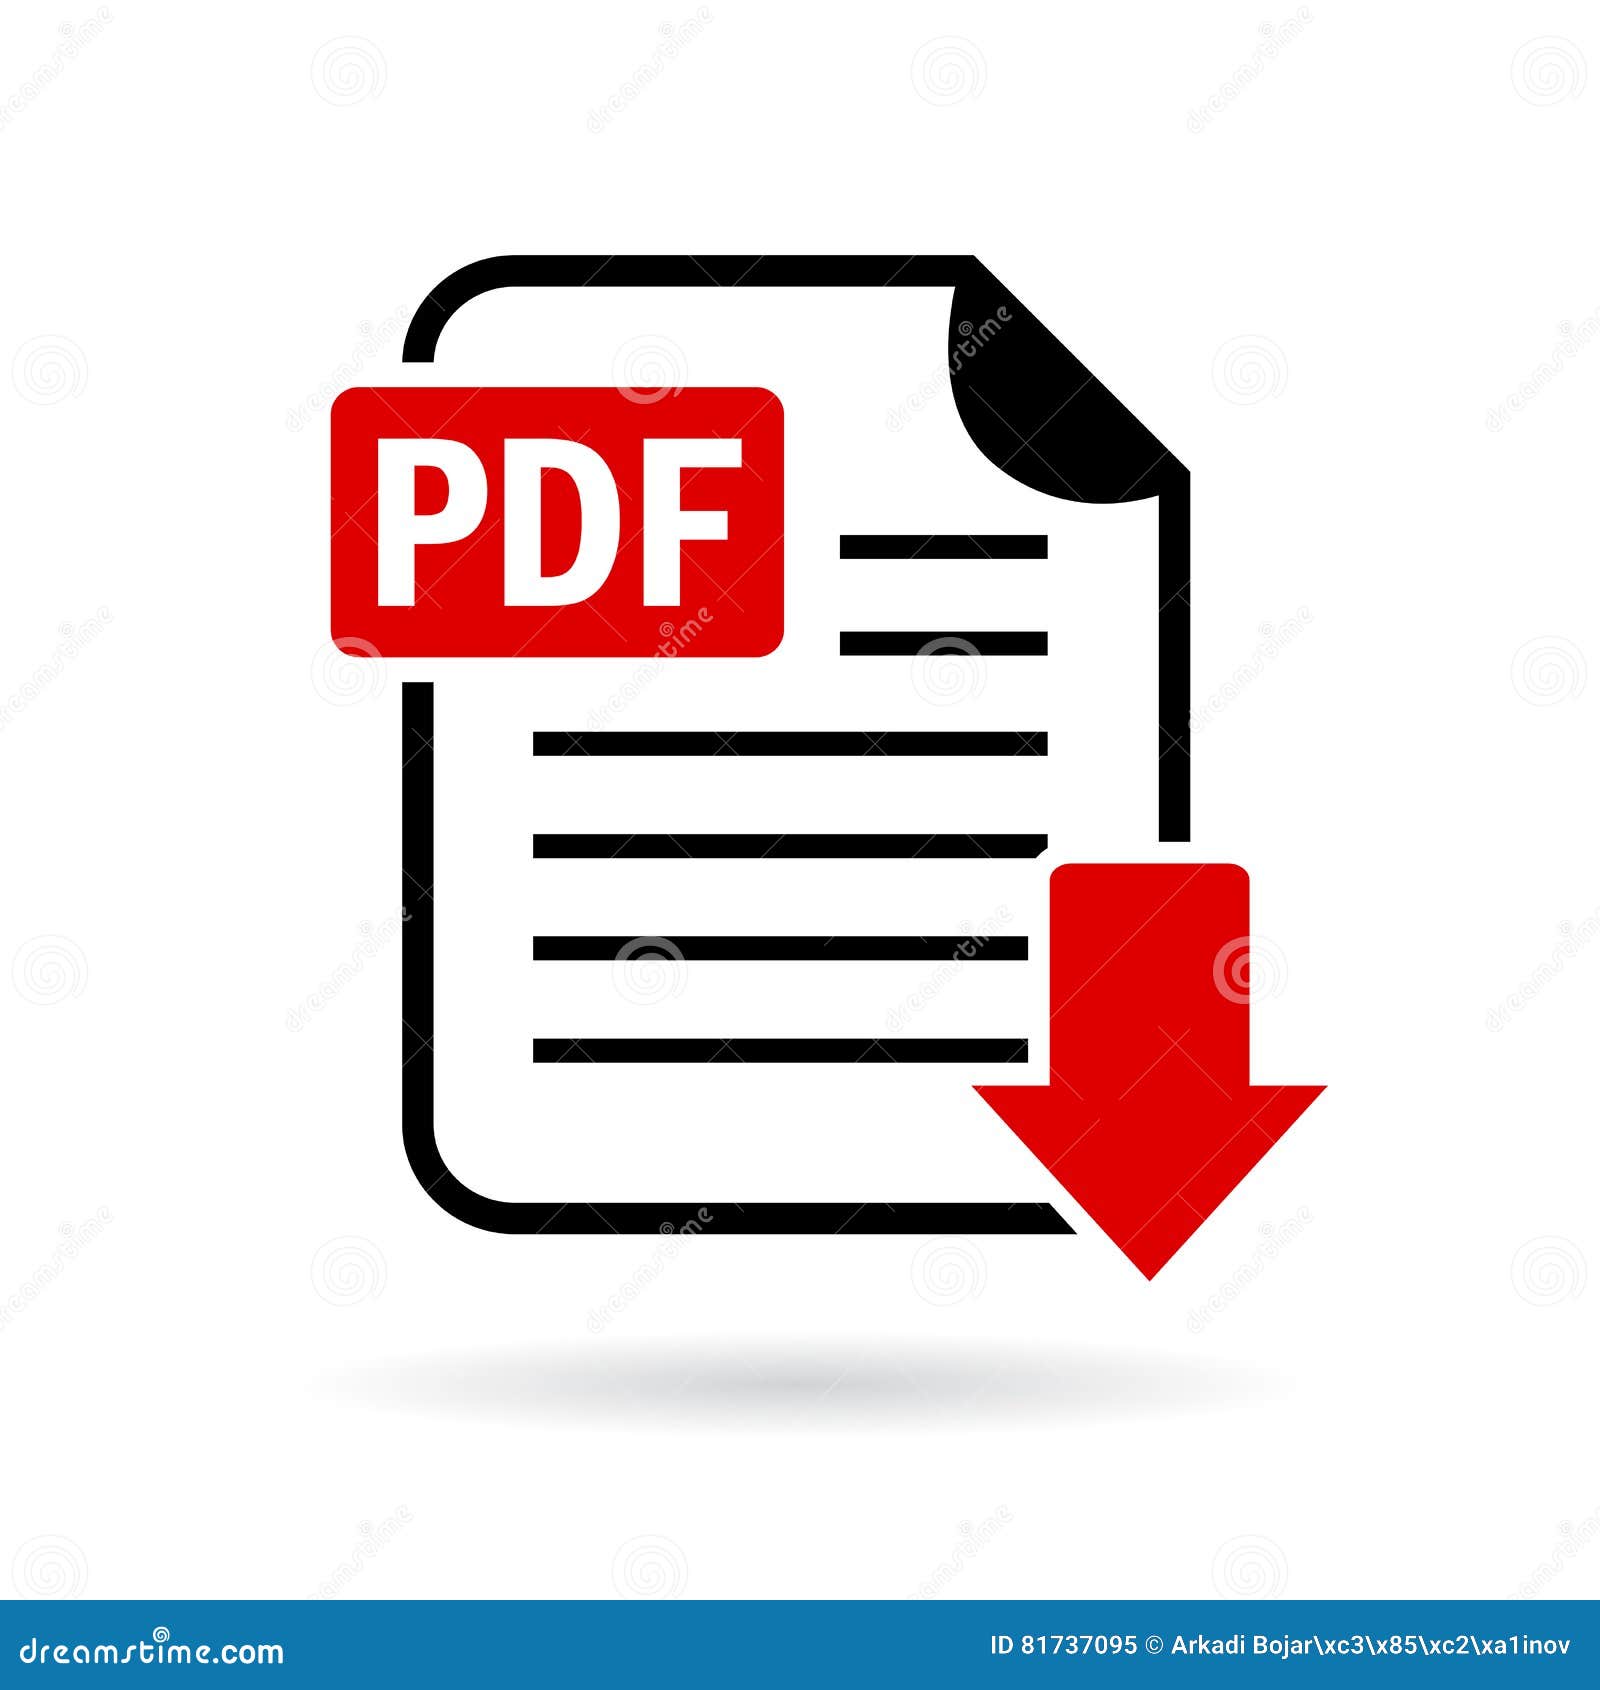 Pdf Document Download Vector Icon Stock Vector ...